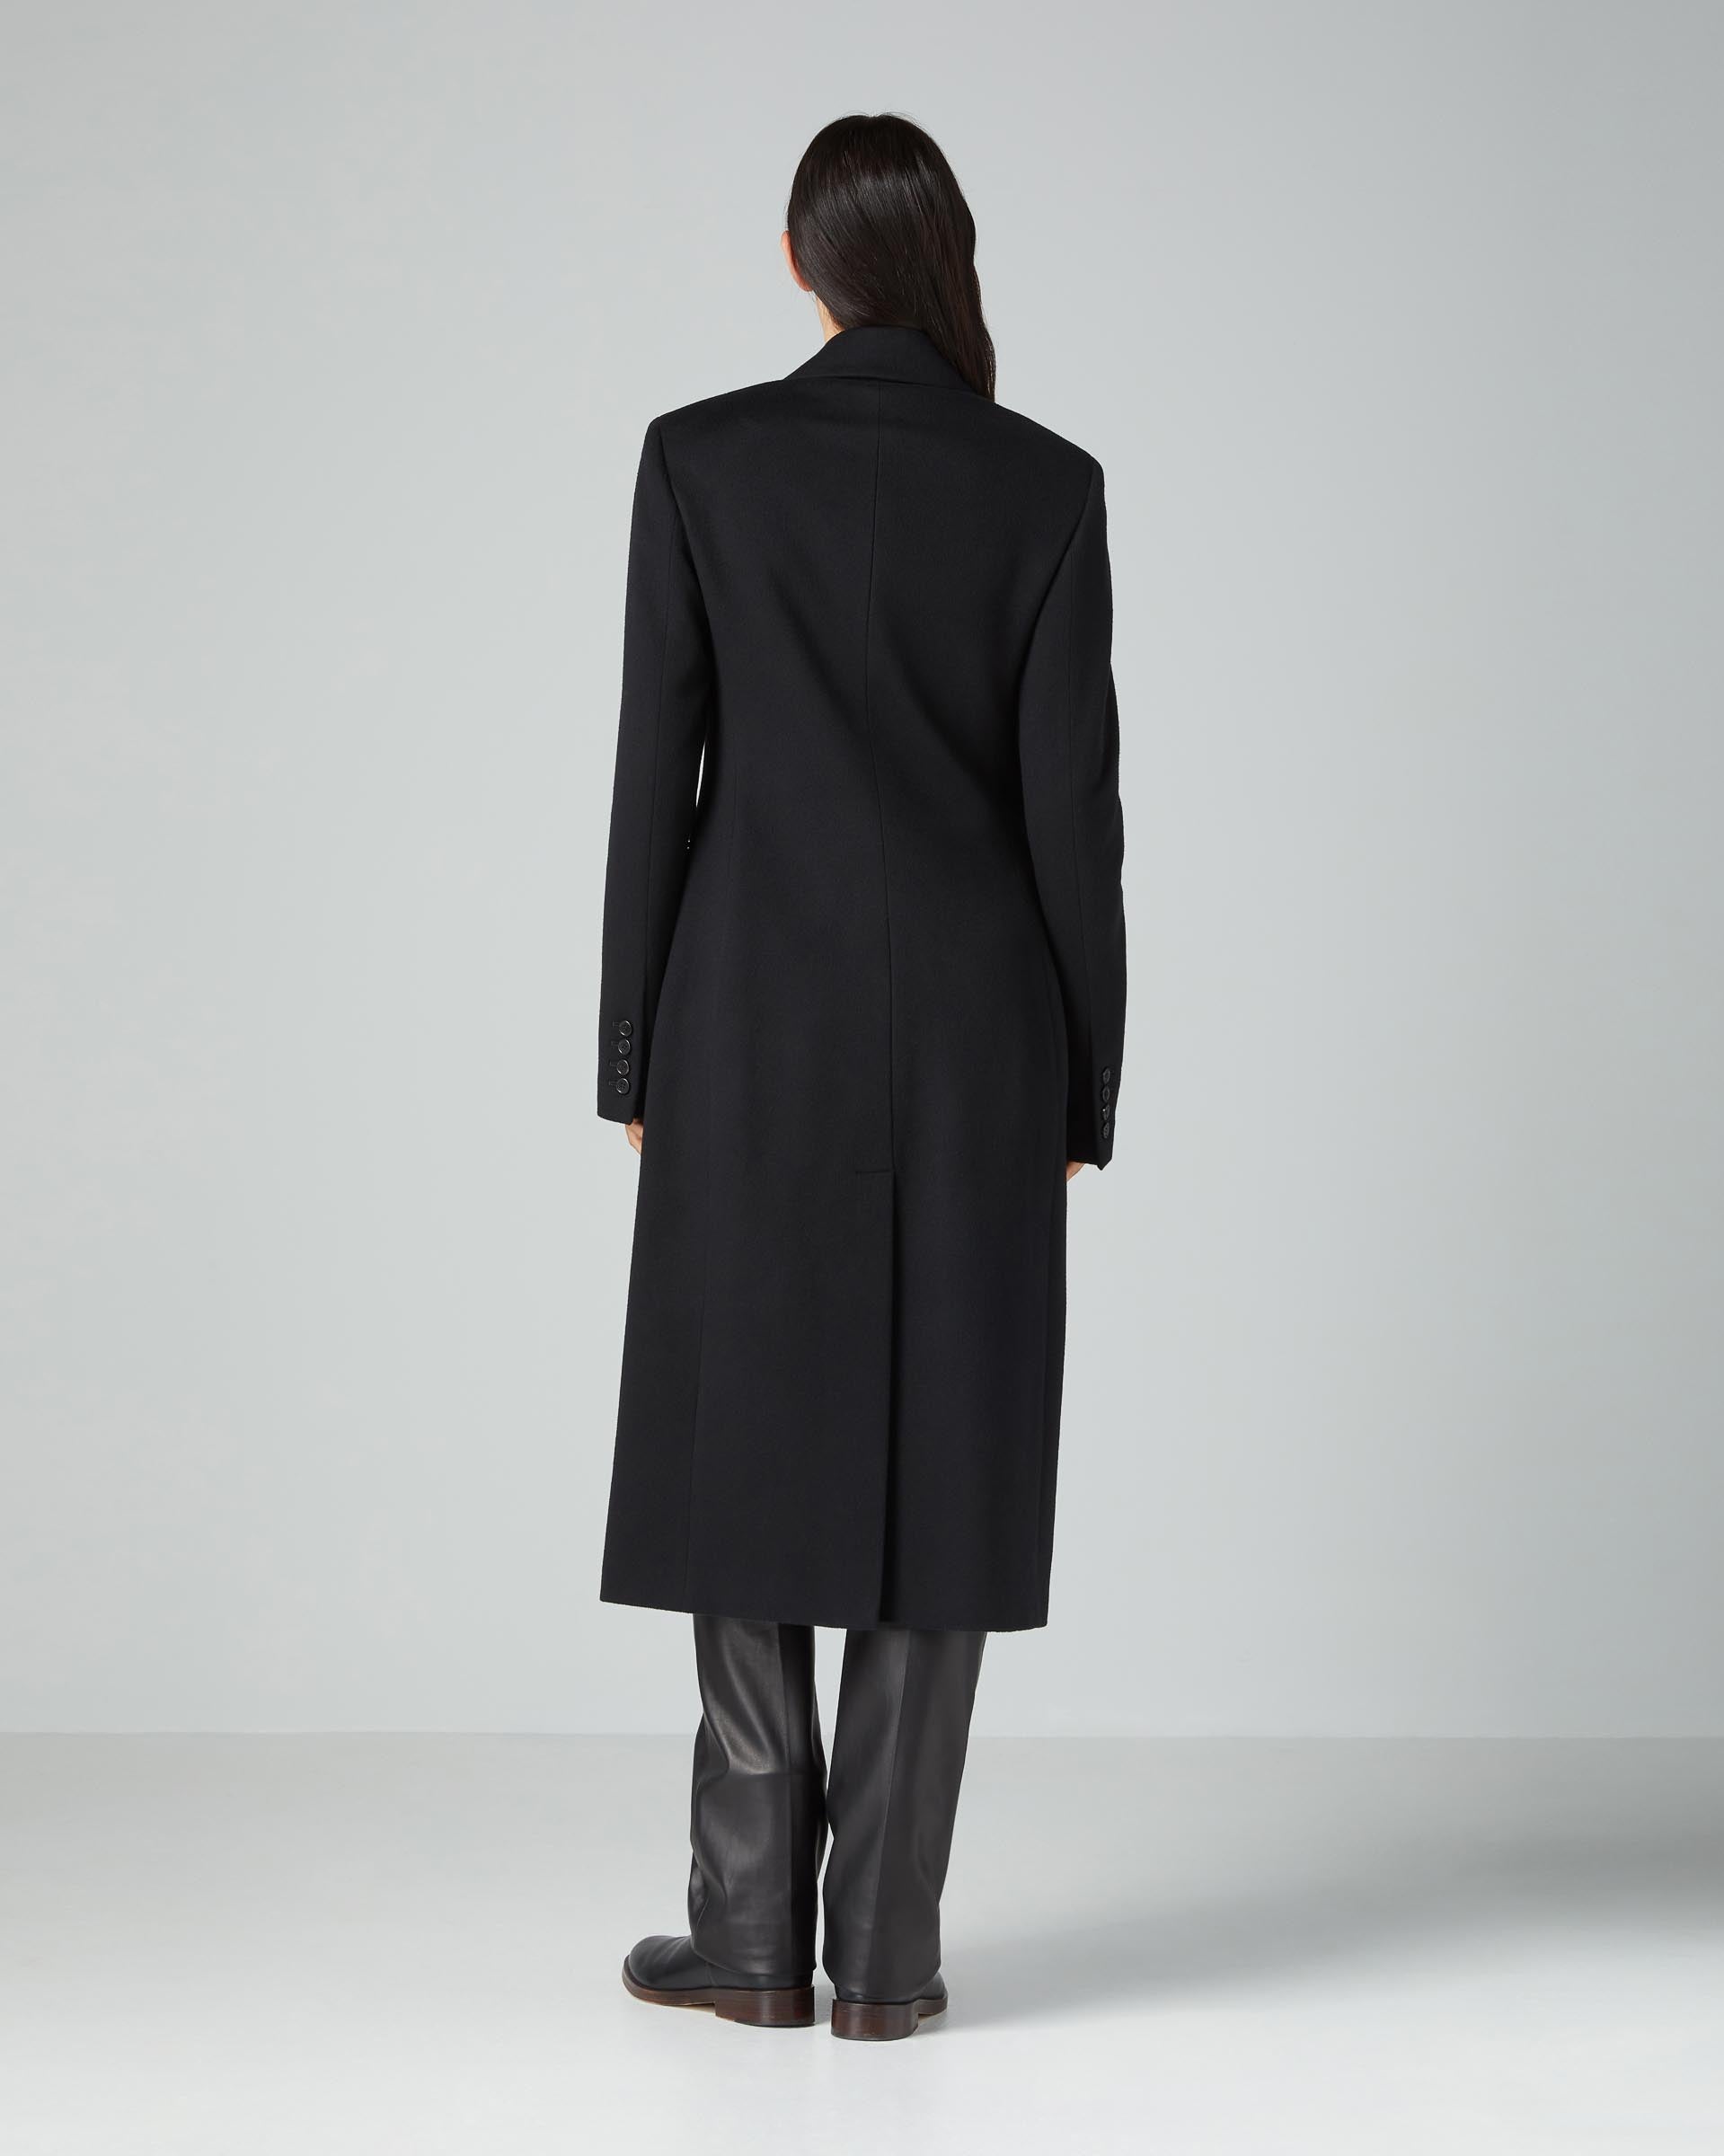 Freya Coat in Cashmere, Black